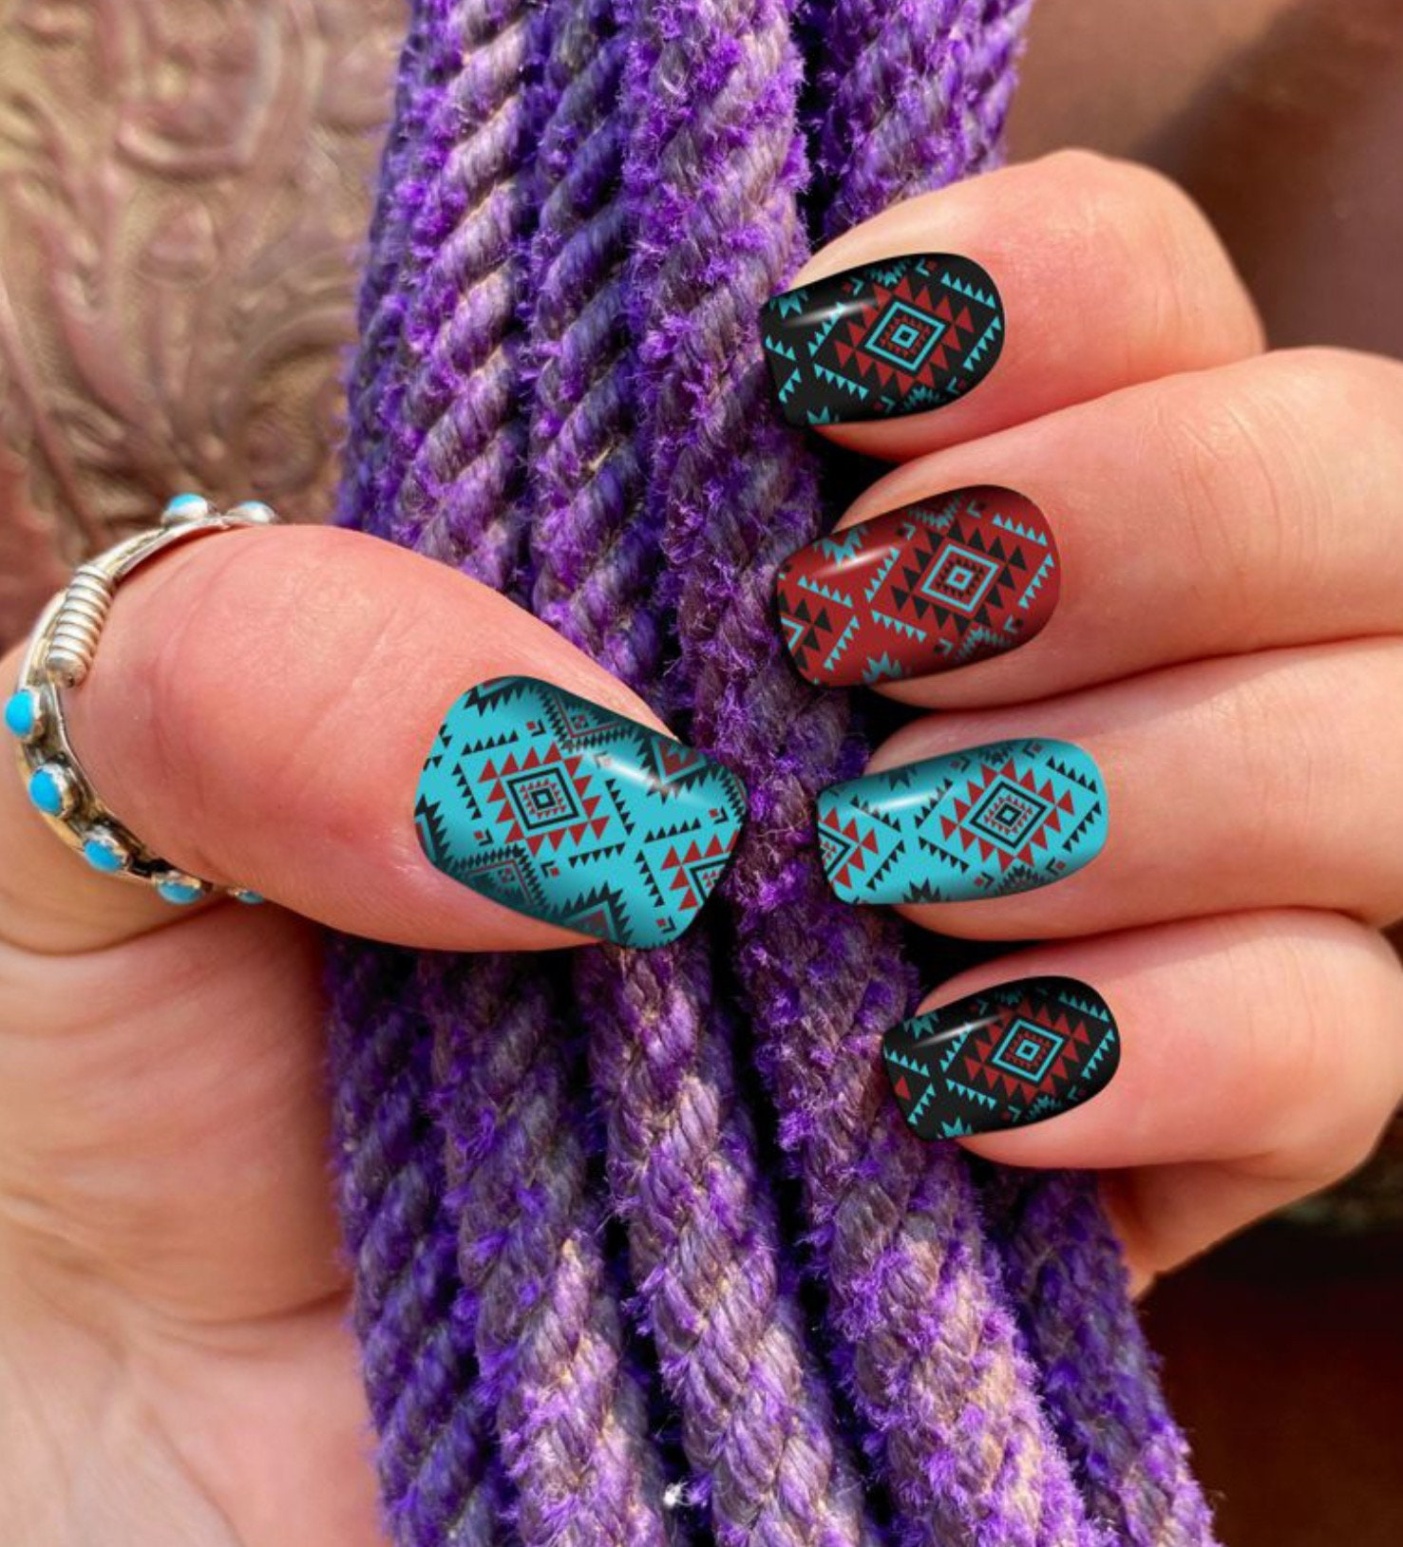 aztec western nail designs Bulan 2 Real nail polish western nail stickers as shown the Aztec design